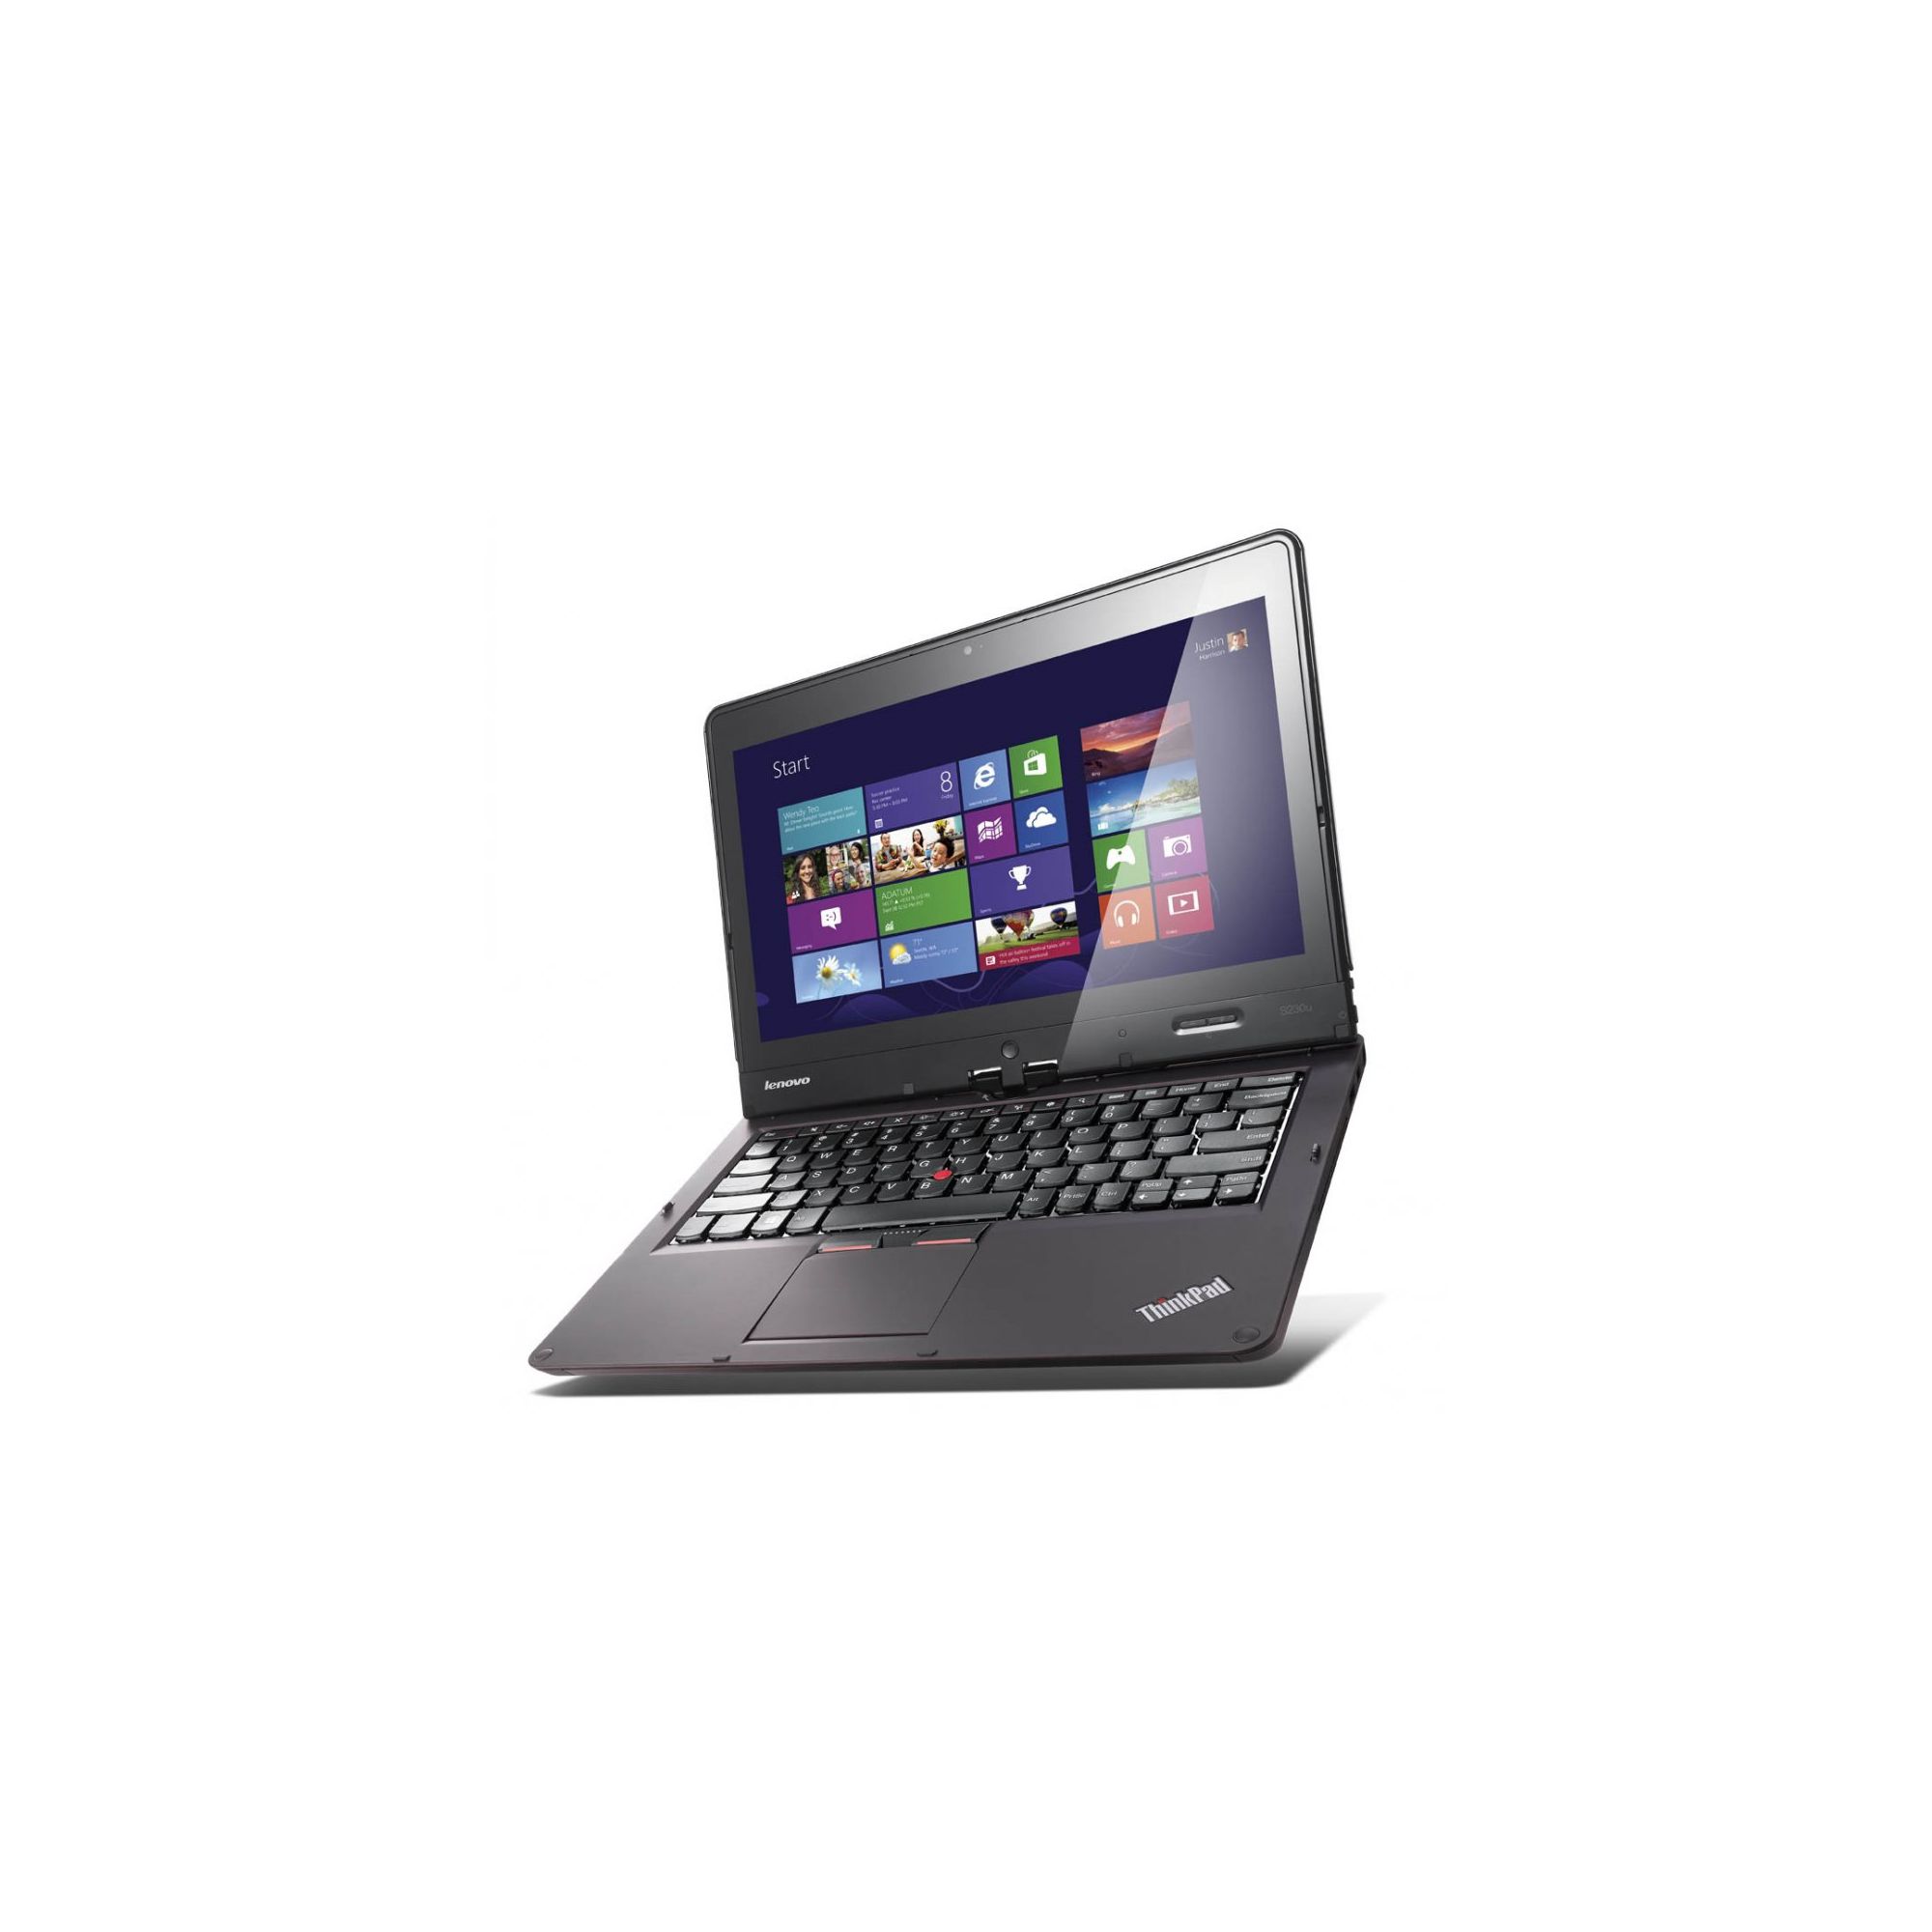 Lenovo ThinkPad Twist S230u 33474PG (12.5 inch Multitouch) Ultrabook Tablet PC Core i3 (3217U) 1.8GHz 4GB 320GB WLAN BT Webcam Windows 8 Pro 64-bit at Tesco Direct